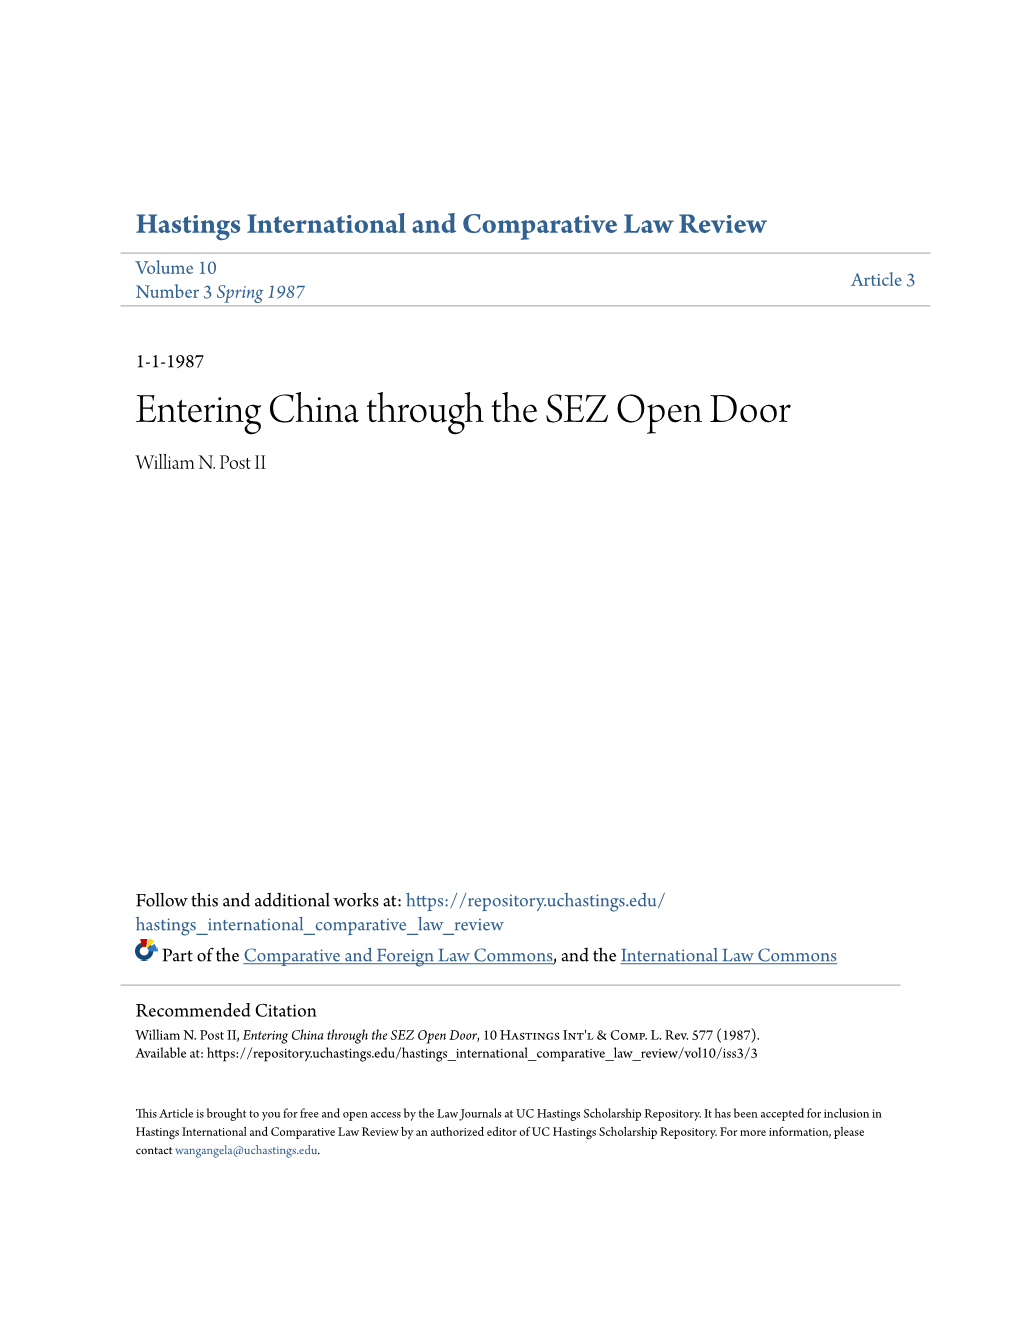 Entering China Through the SEZ Open Door William N